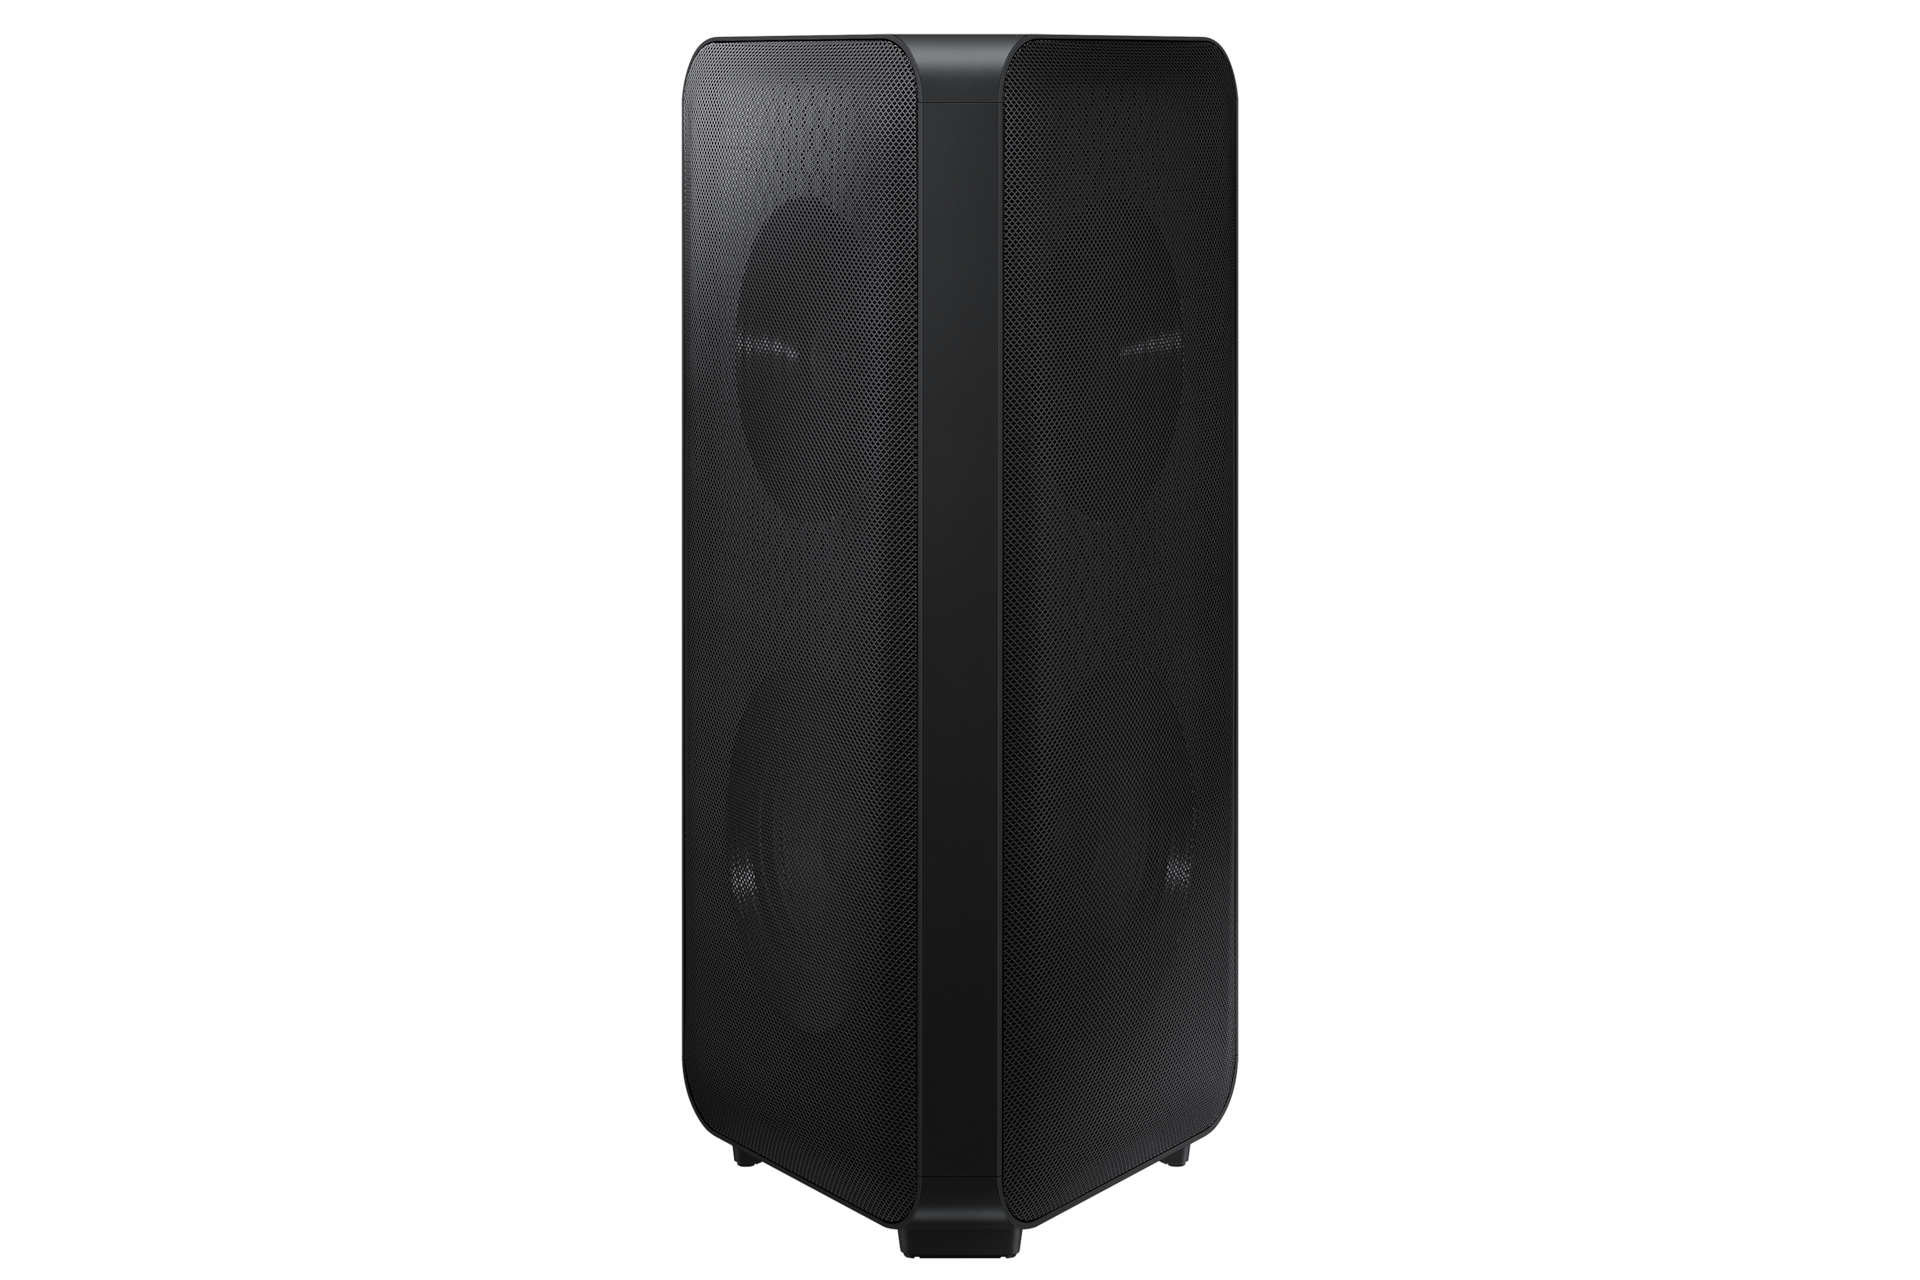 Samsung Sound Tower MX-ST50B